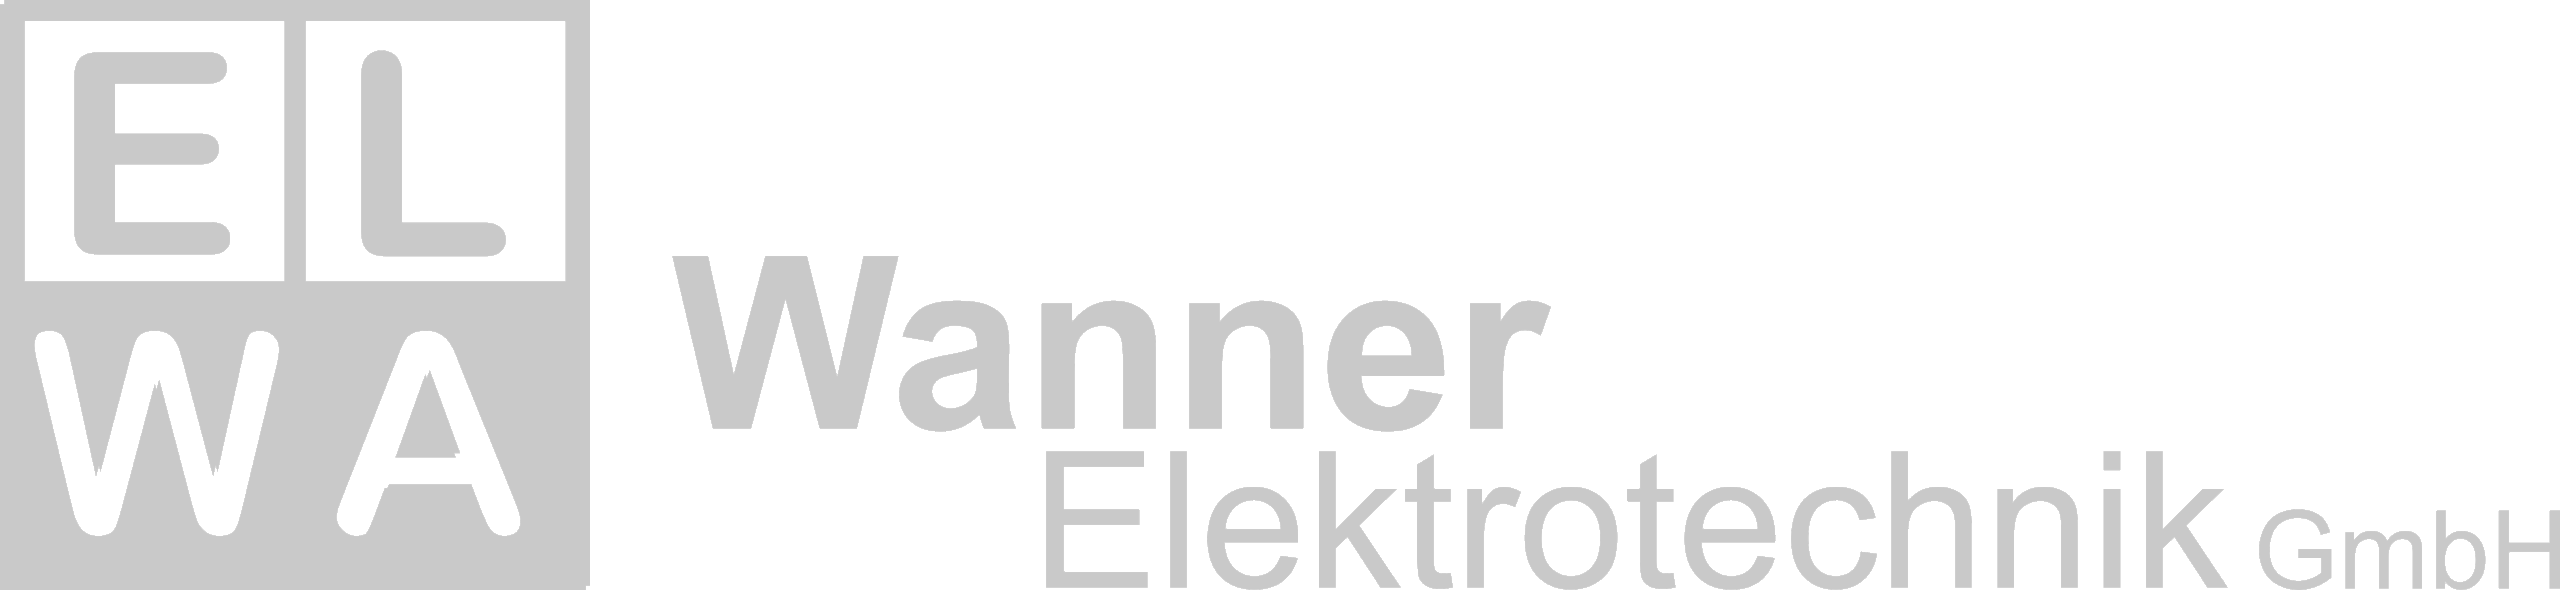 Wanner Elektrotechnik GmbH